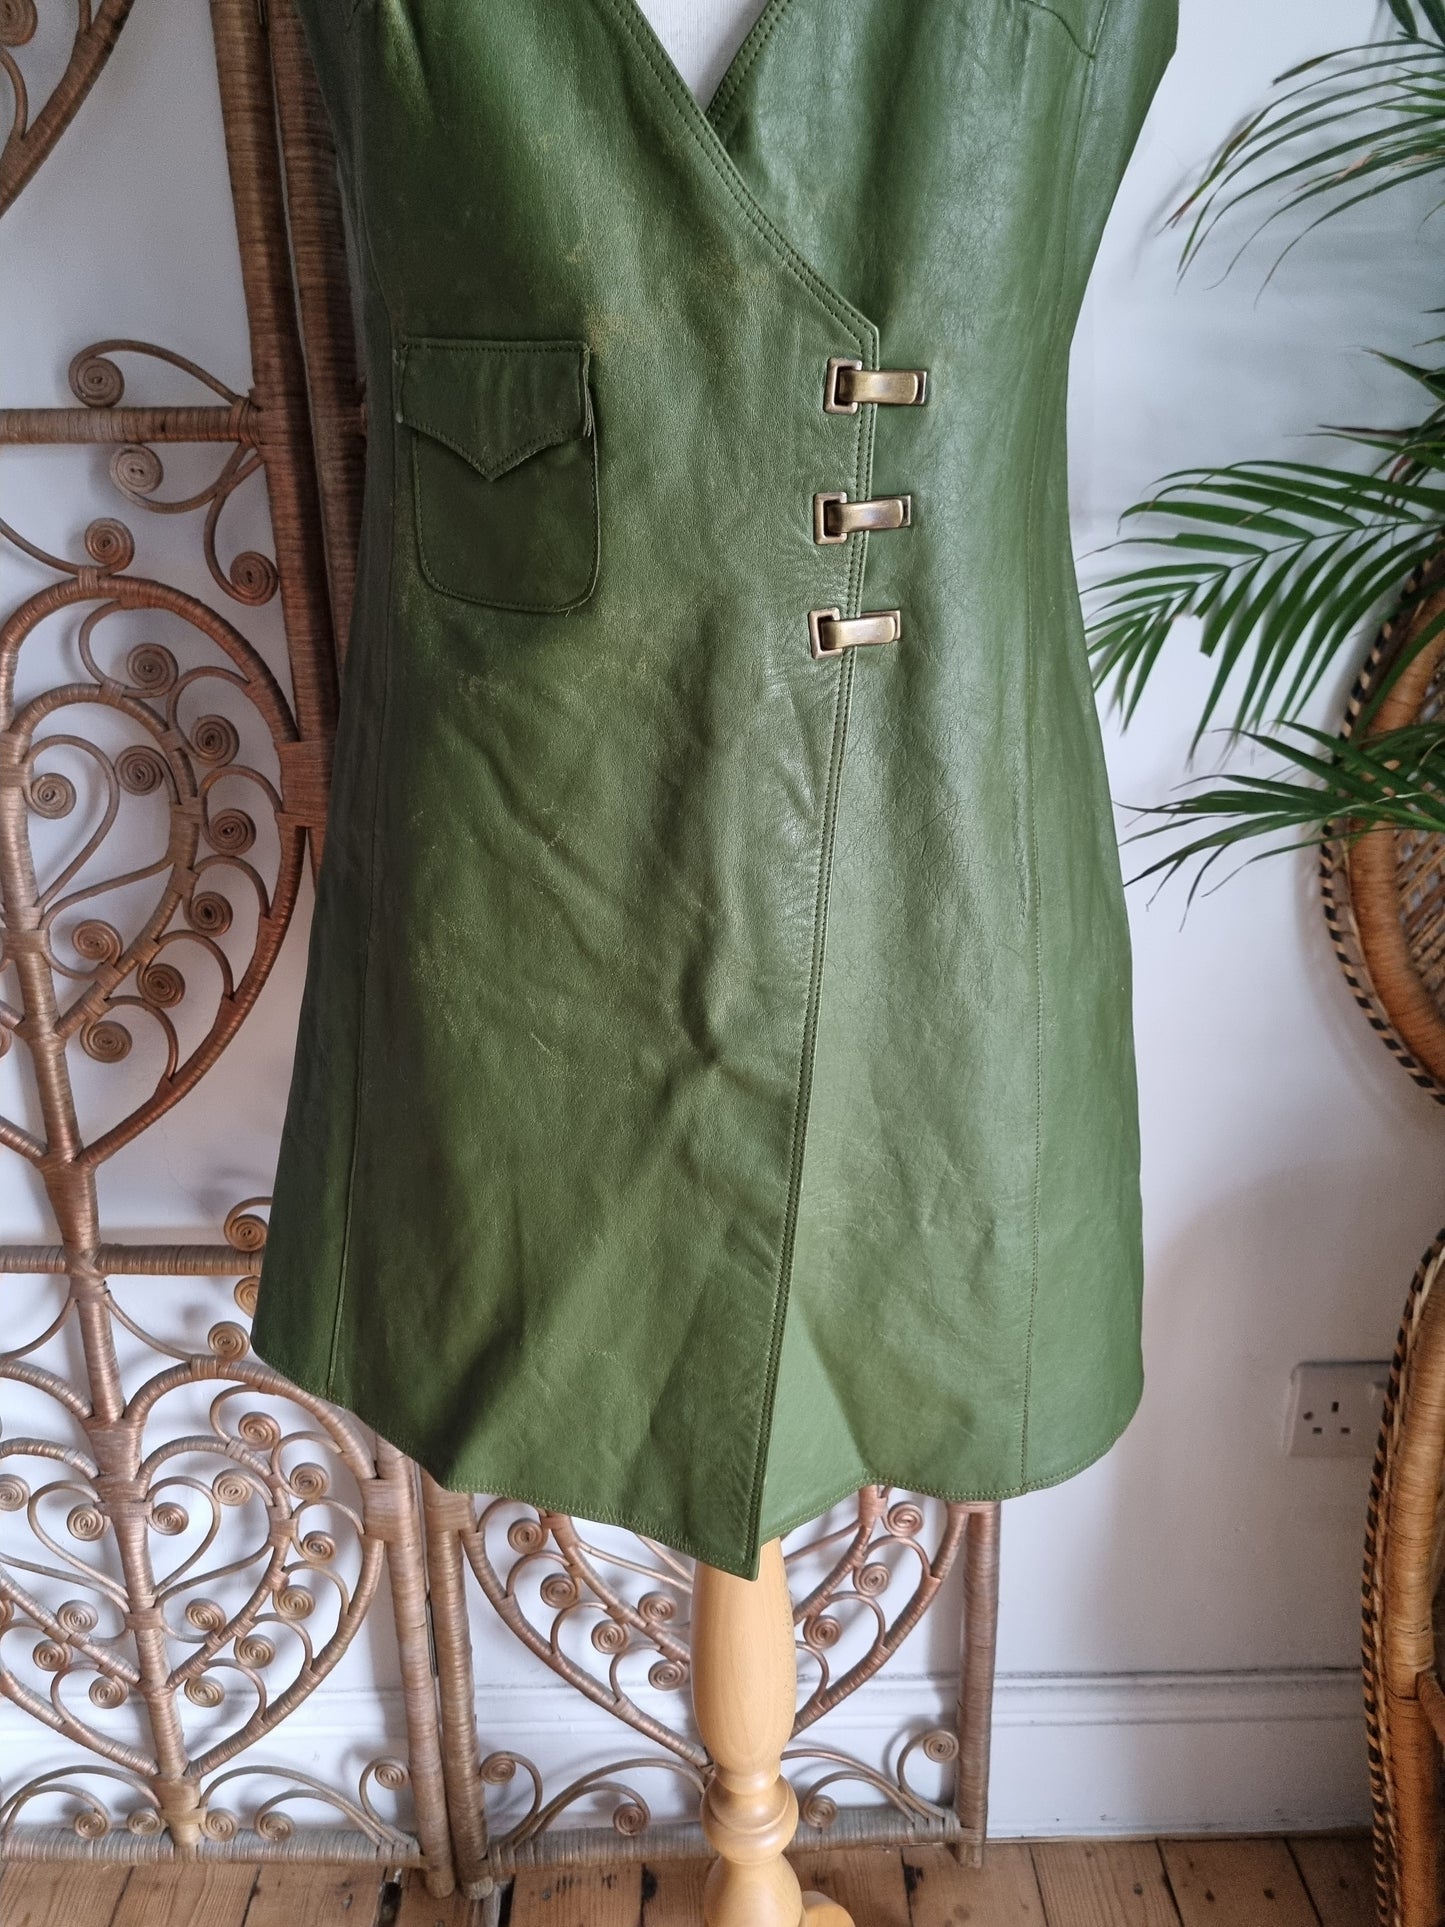 Vintage green leather dress